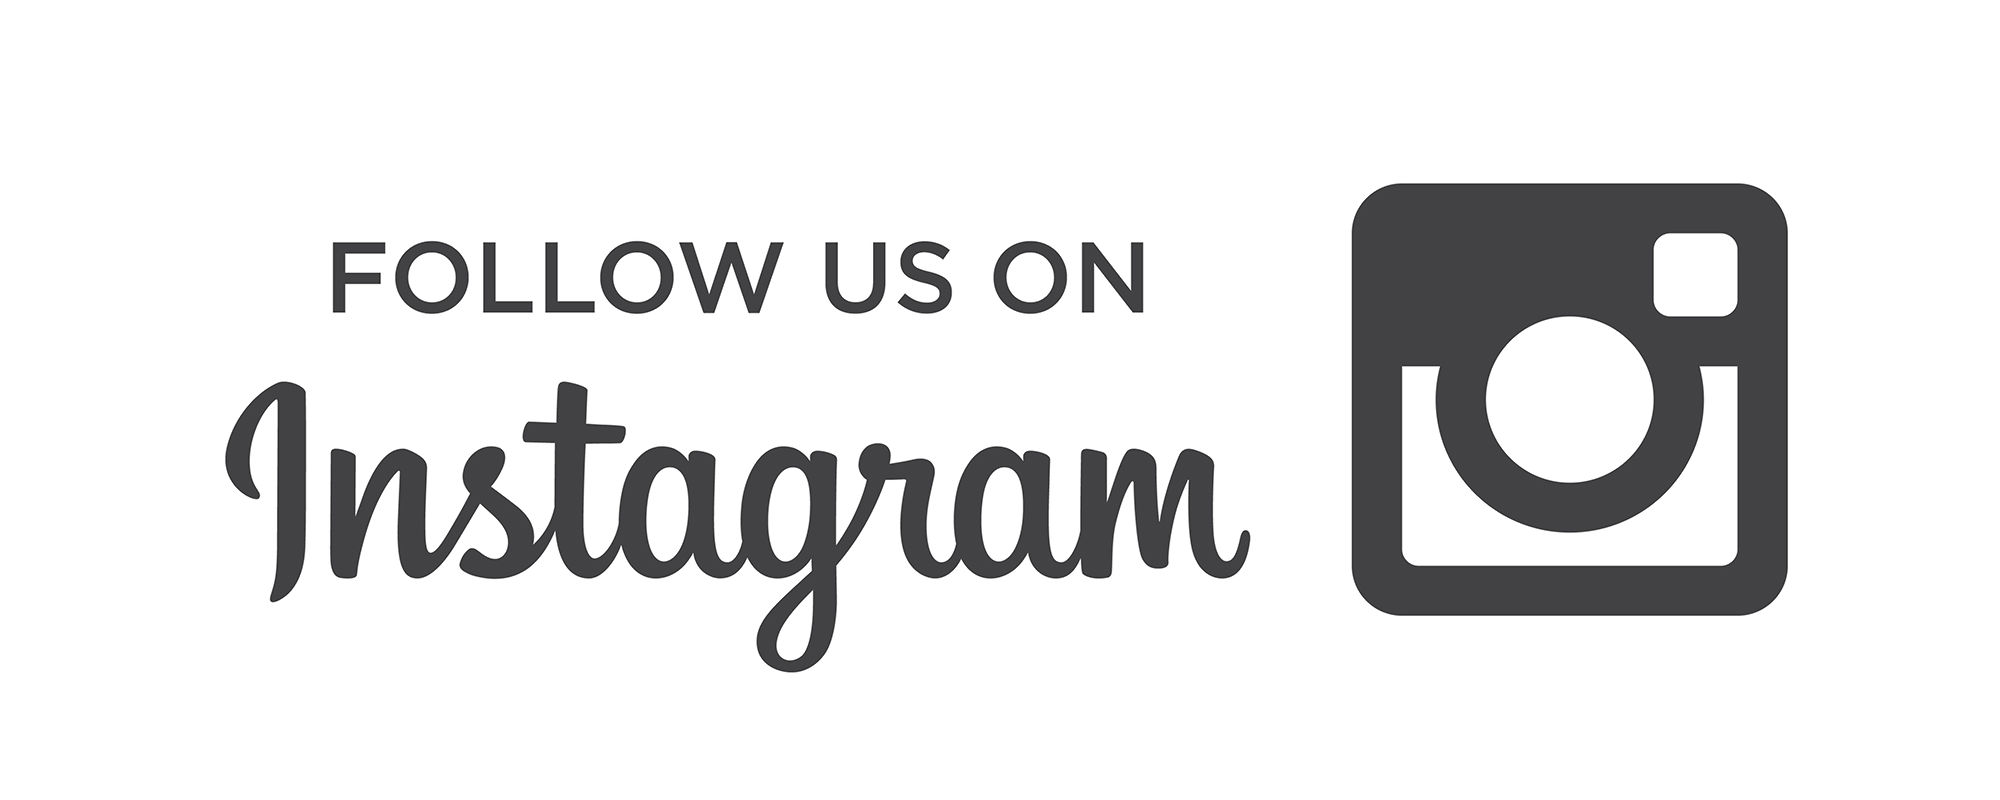 Follow On Instagram New Logo - Follow On Instagram Icon Wwwpixsharkcom Images Logo Image - Free ...